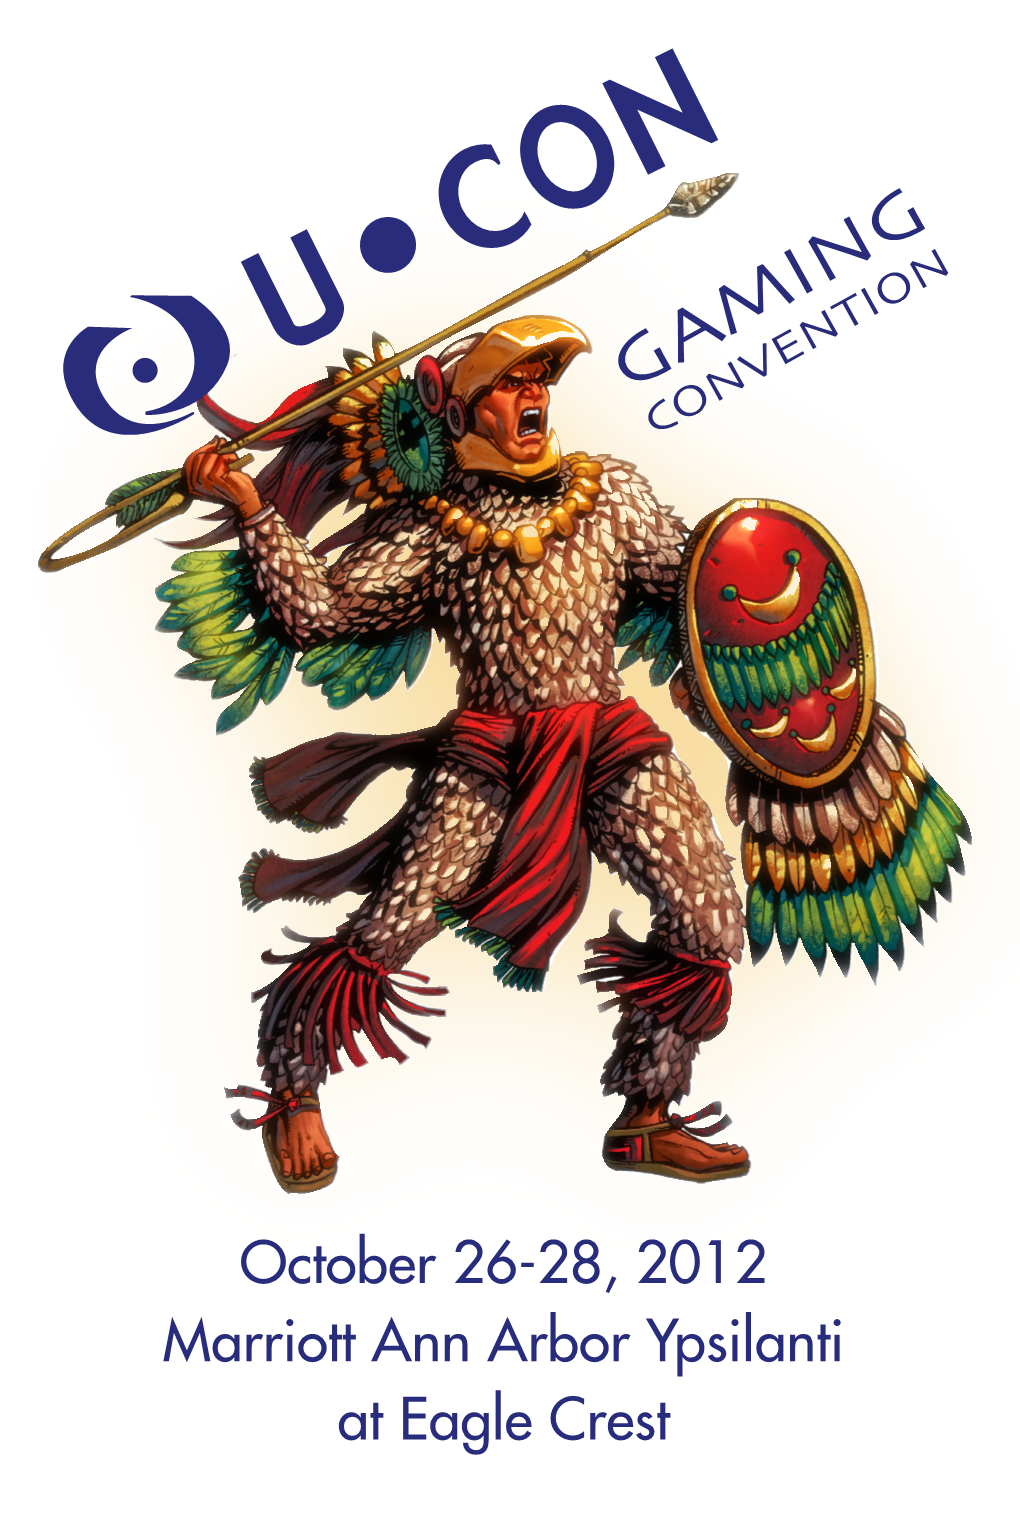 October 26-28, 2012 Marriott Ann Arbor Ypsilanti at Eagle Crest Info Info 2012 U•CON GAMING CONVENTION